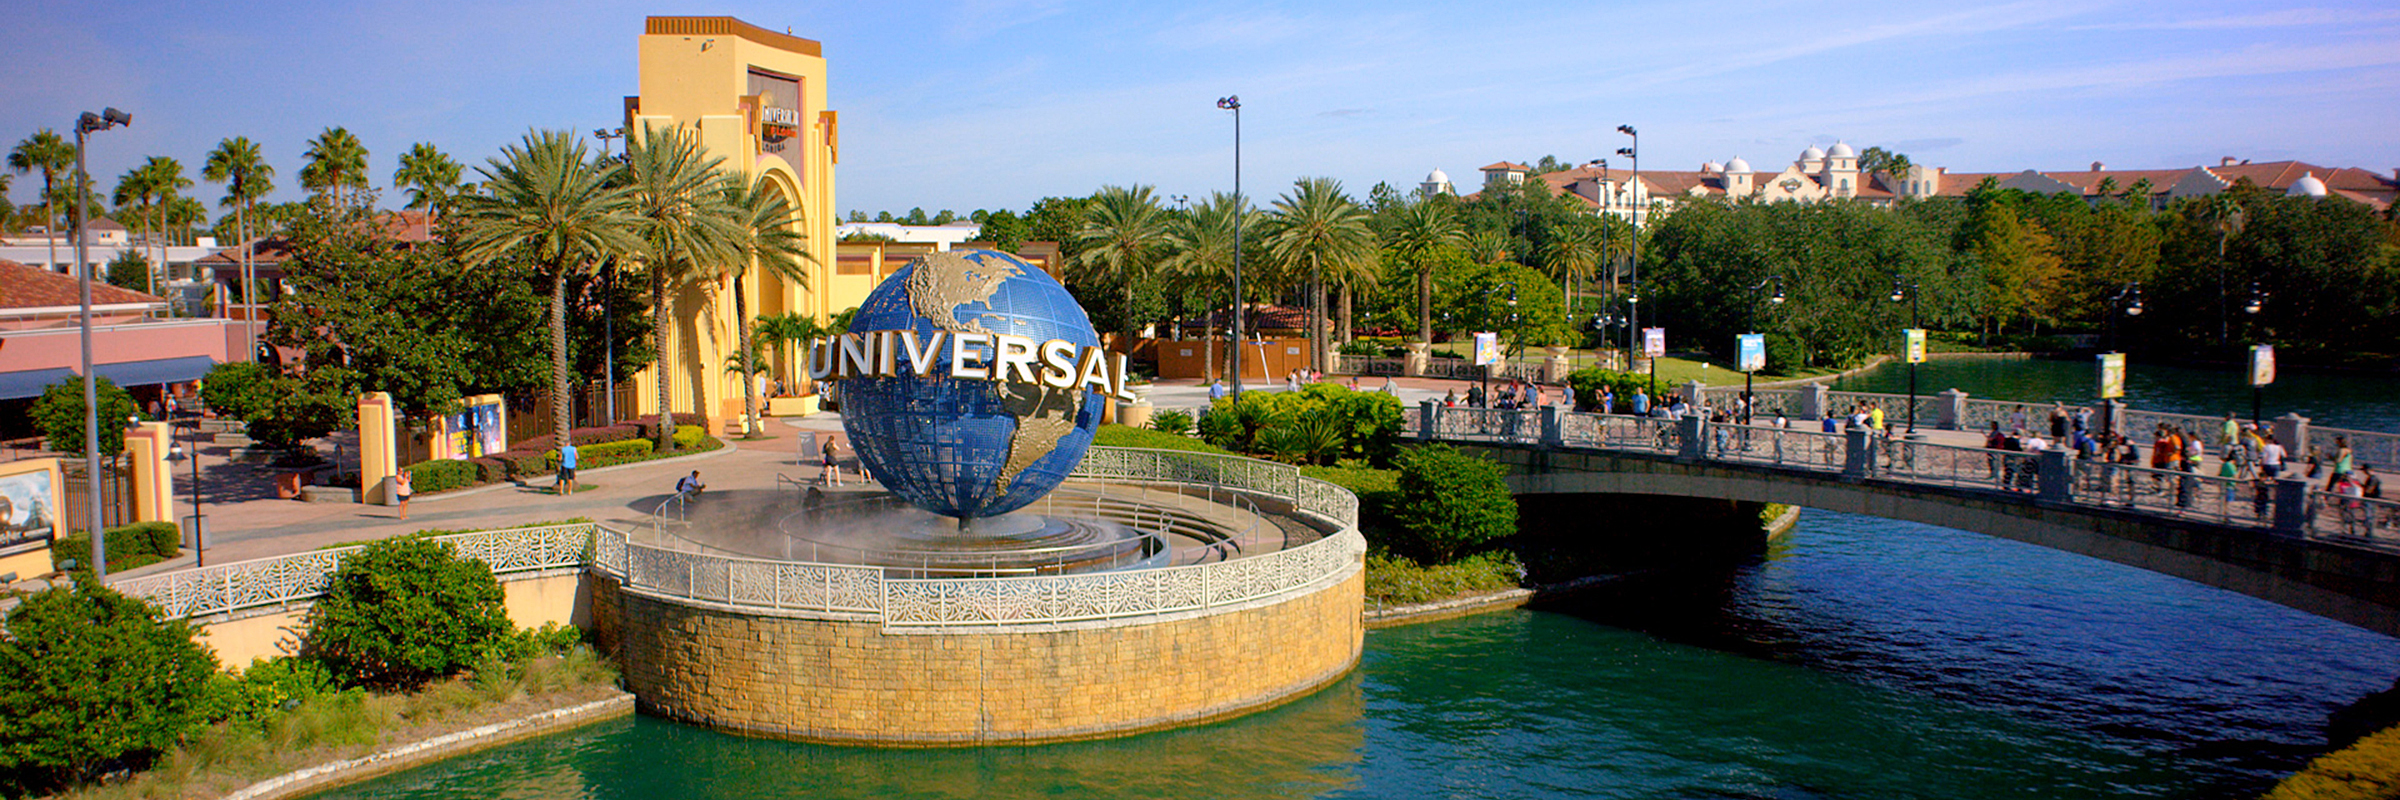 Universal Studios Vacations